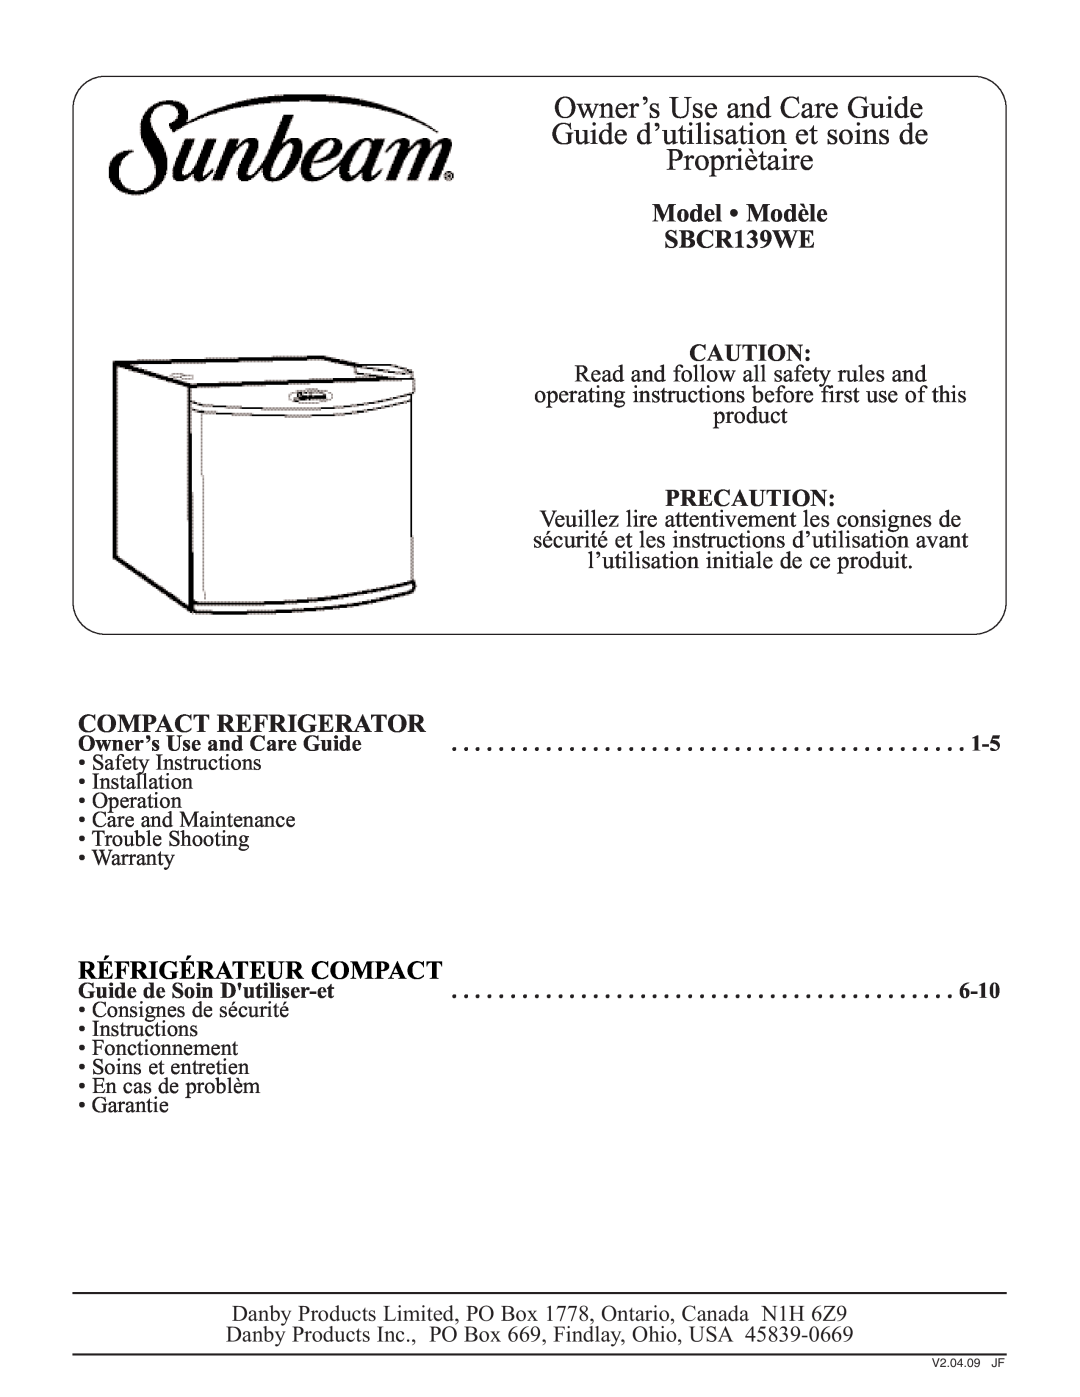 Sunbeam warranty Model Modèle SBCR139WE, Compact Refrigerator, Owner’s Use and Care Guide, Guide de Soin Dutiliser-et 